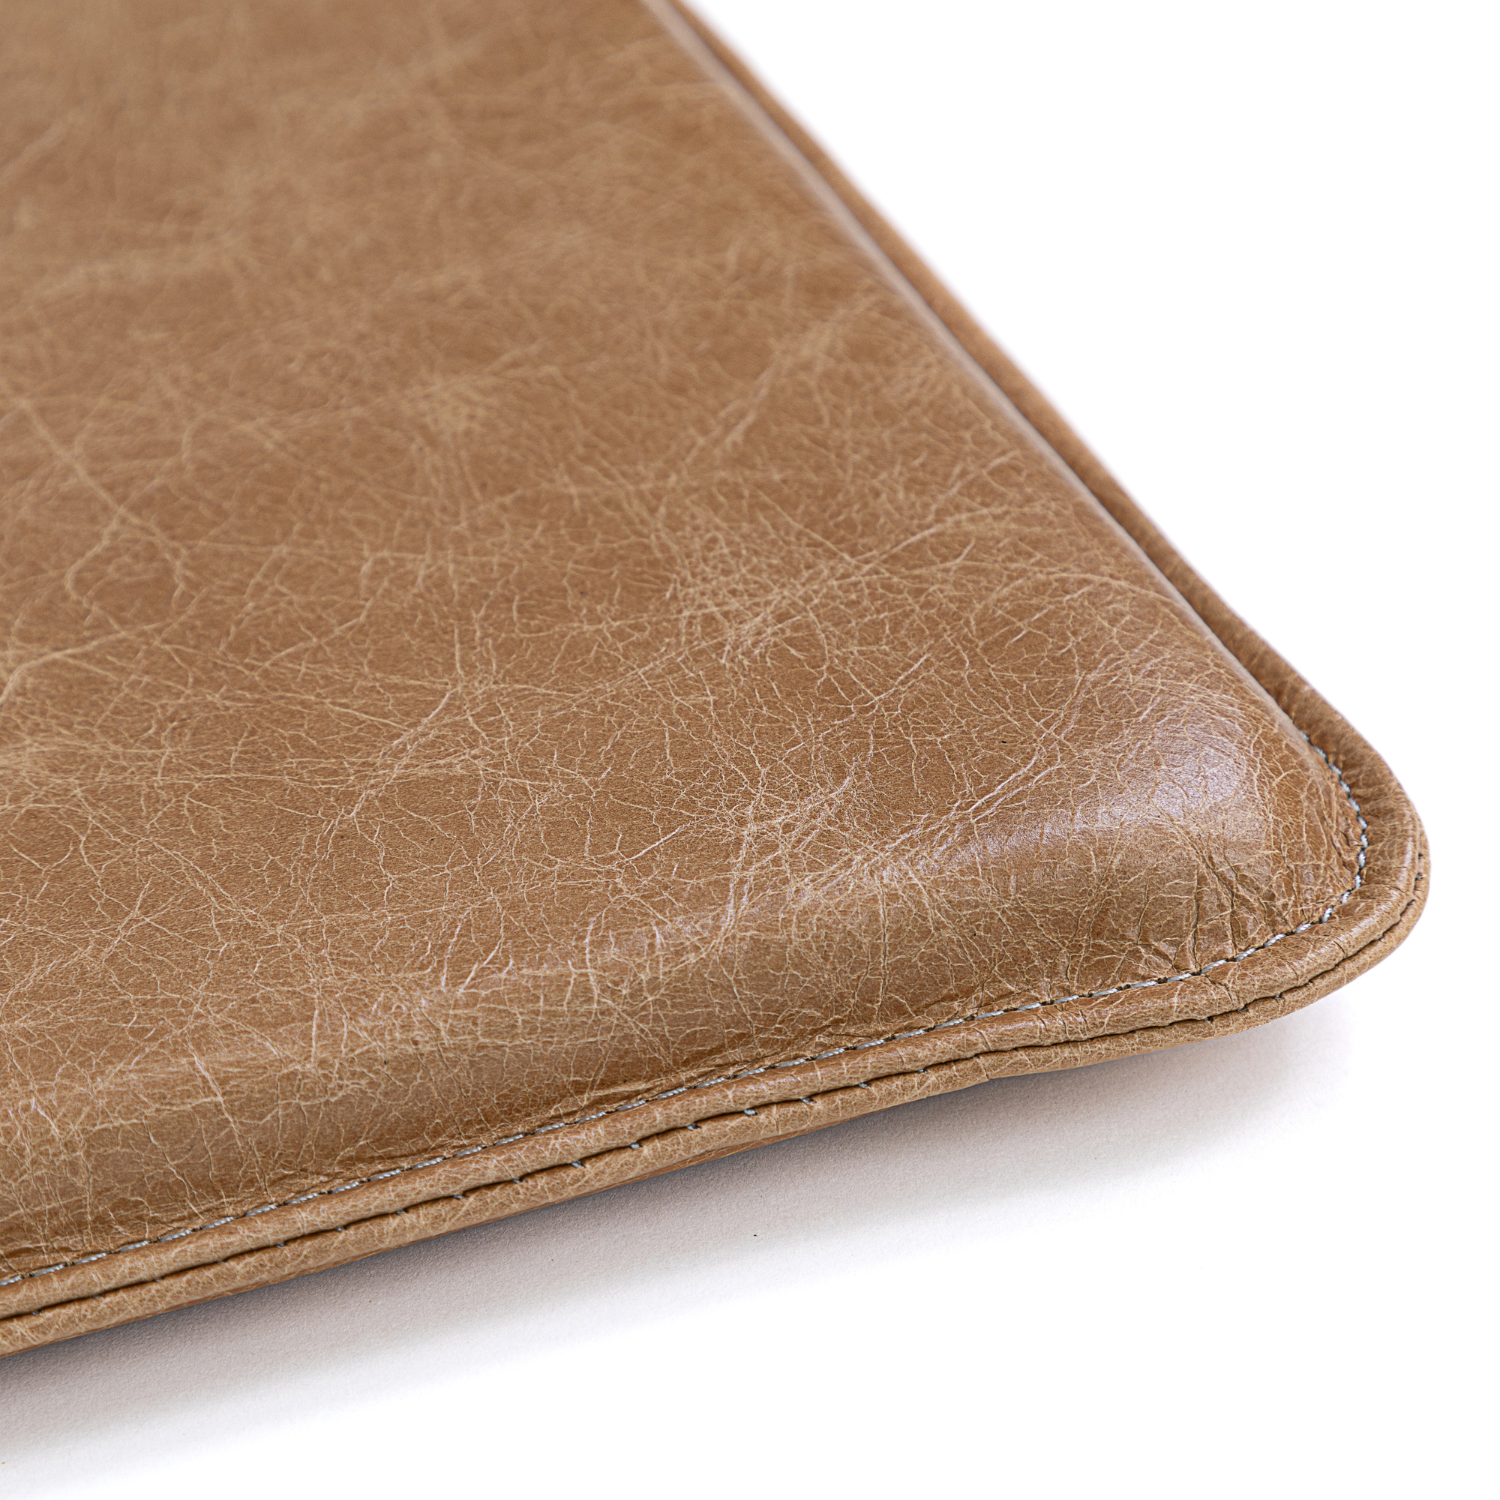 Tan leather cushion